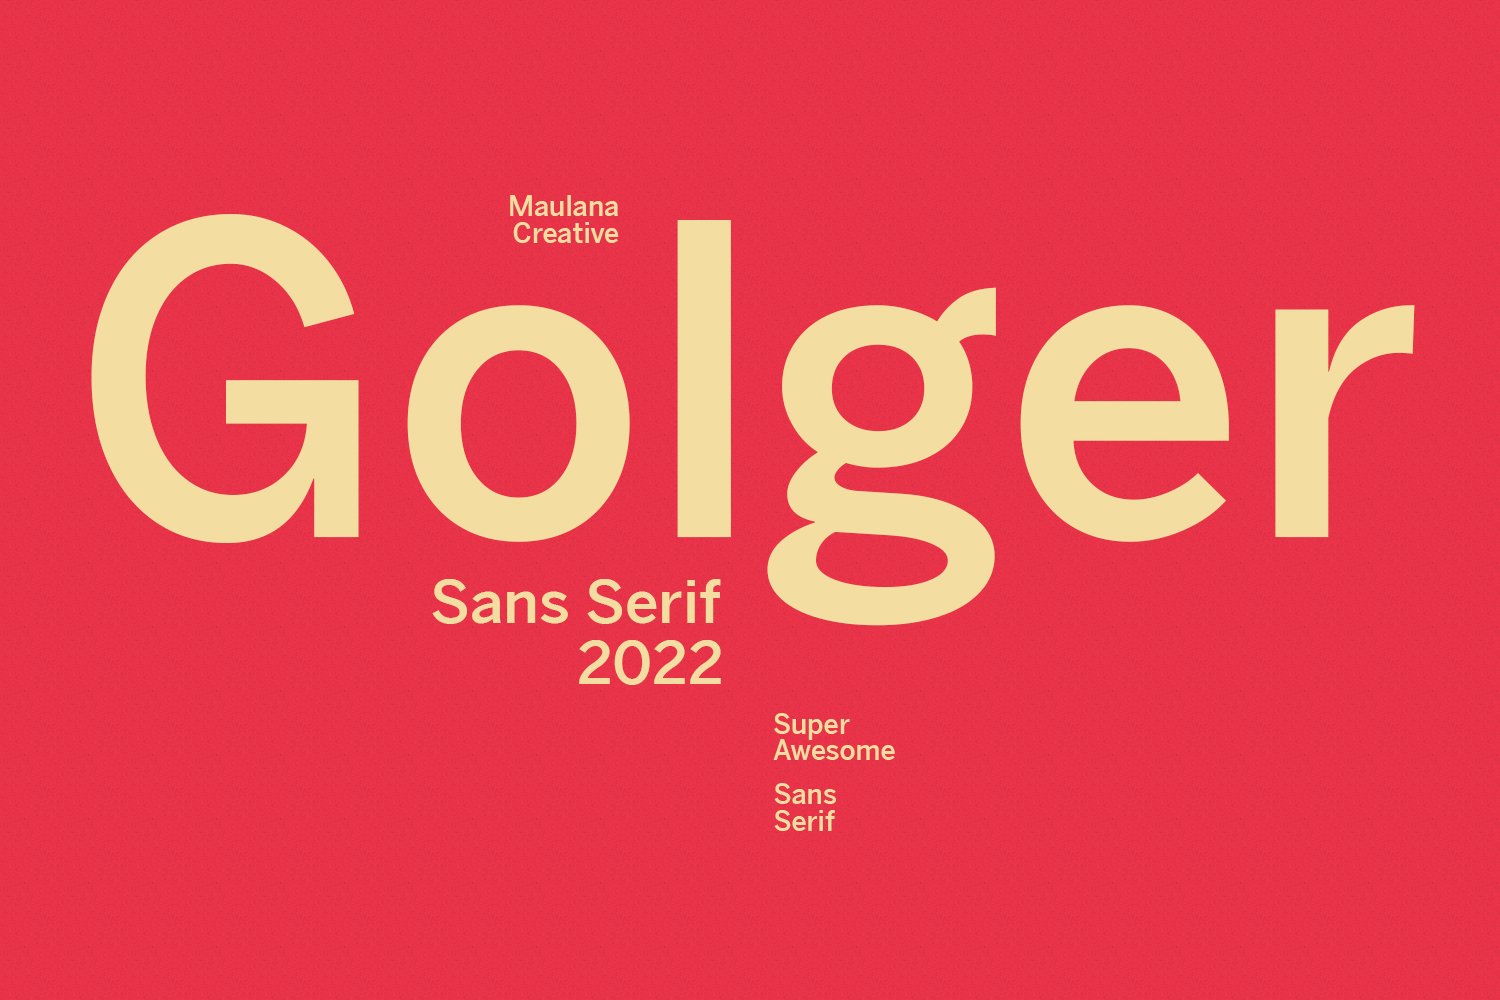 Golger Sans Serif Font cover image.